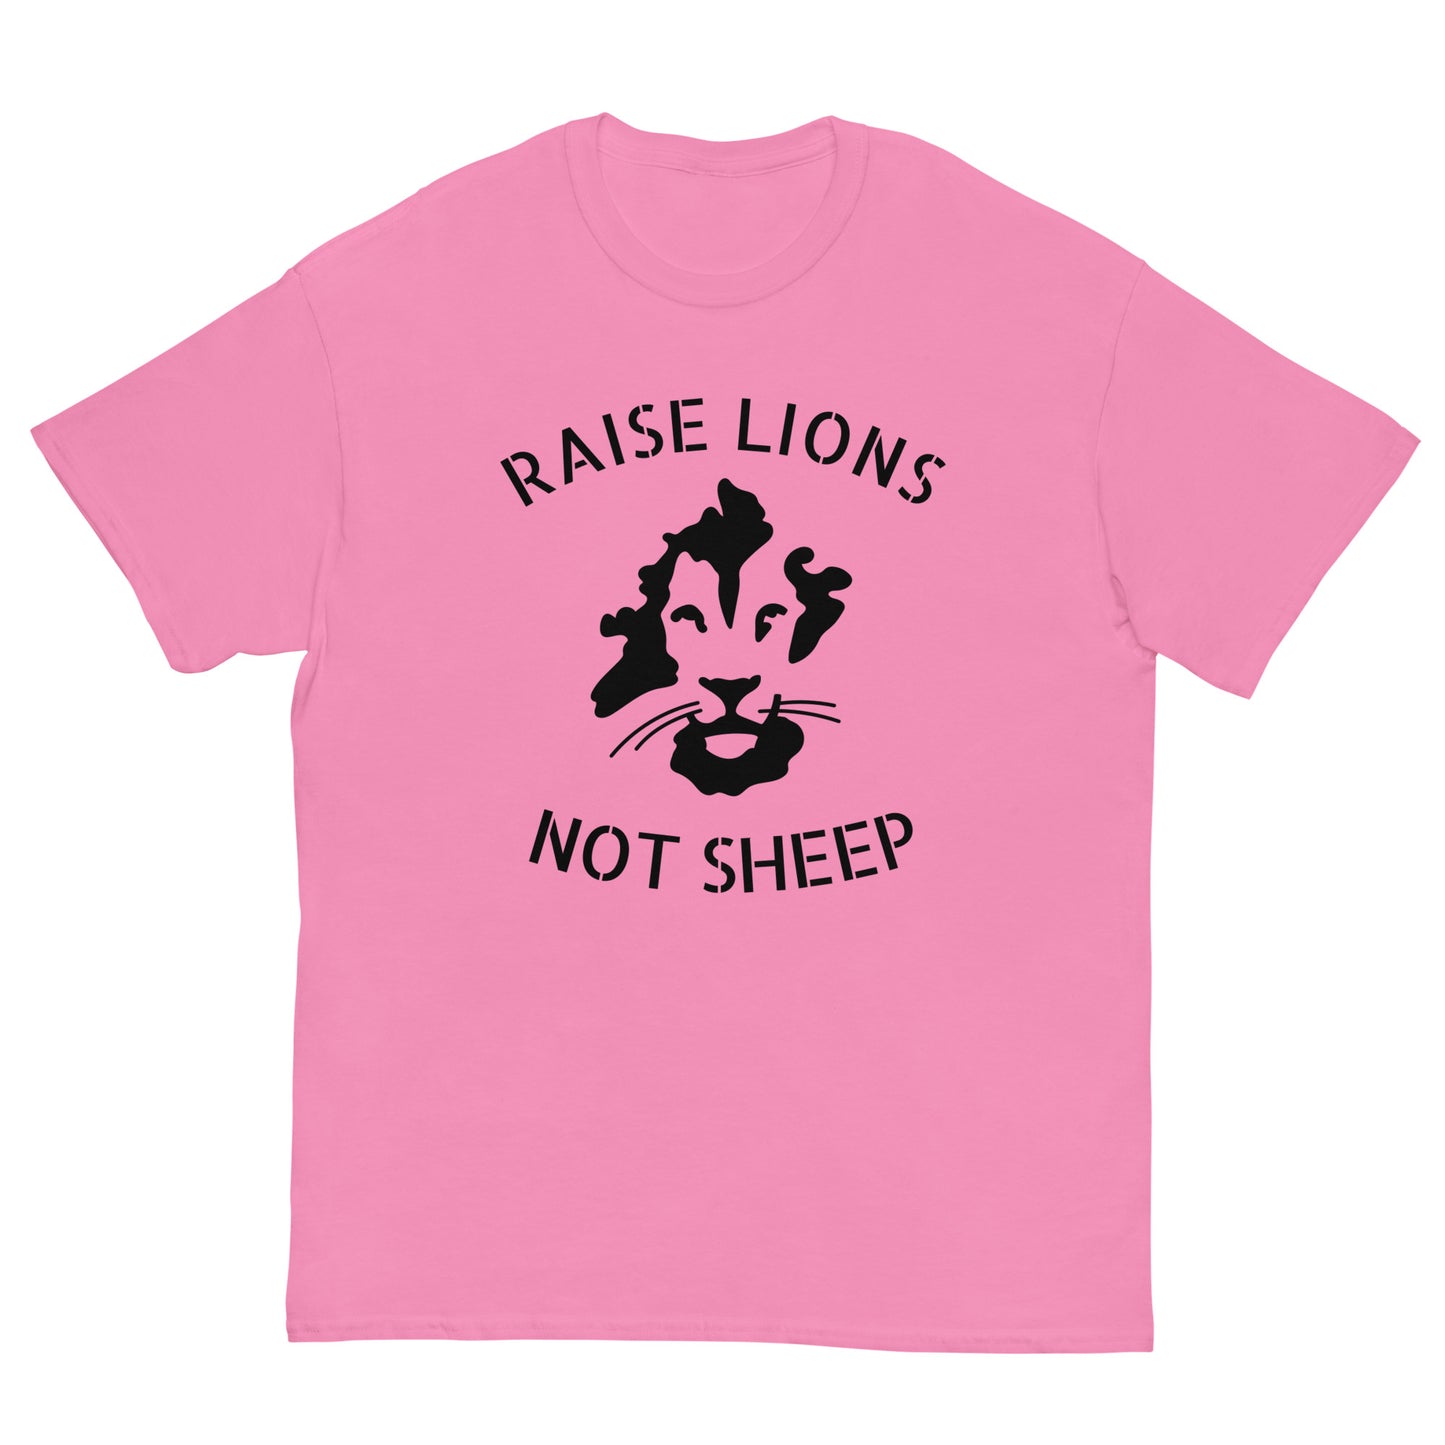 Raise LIONS, not sheep - Classic tee